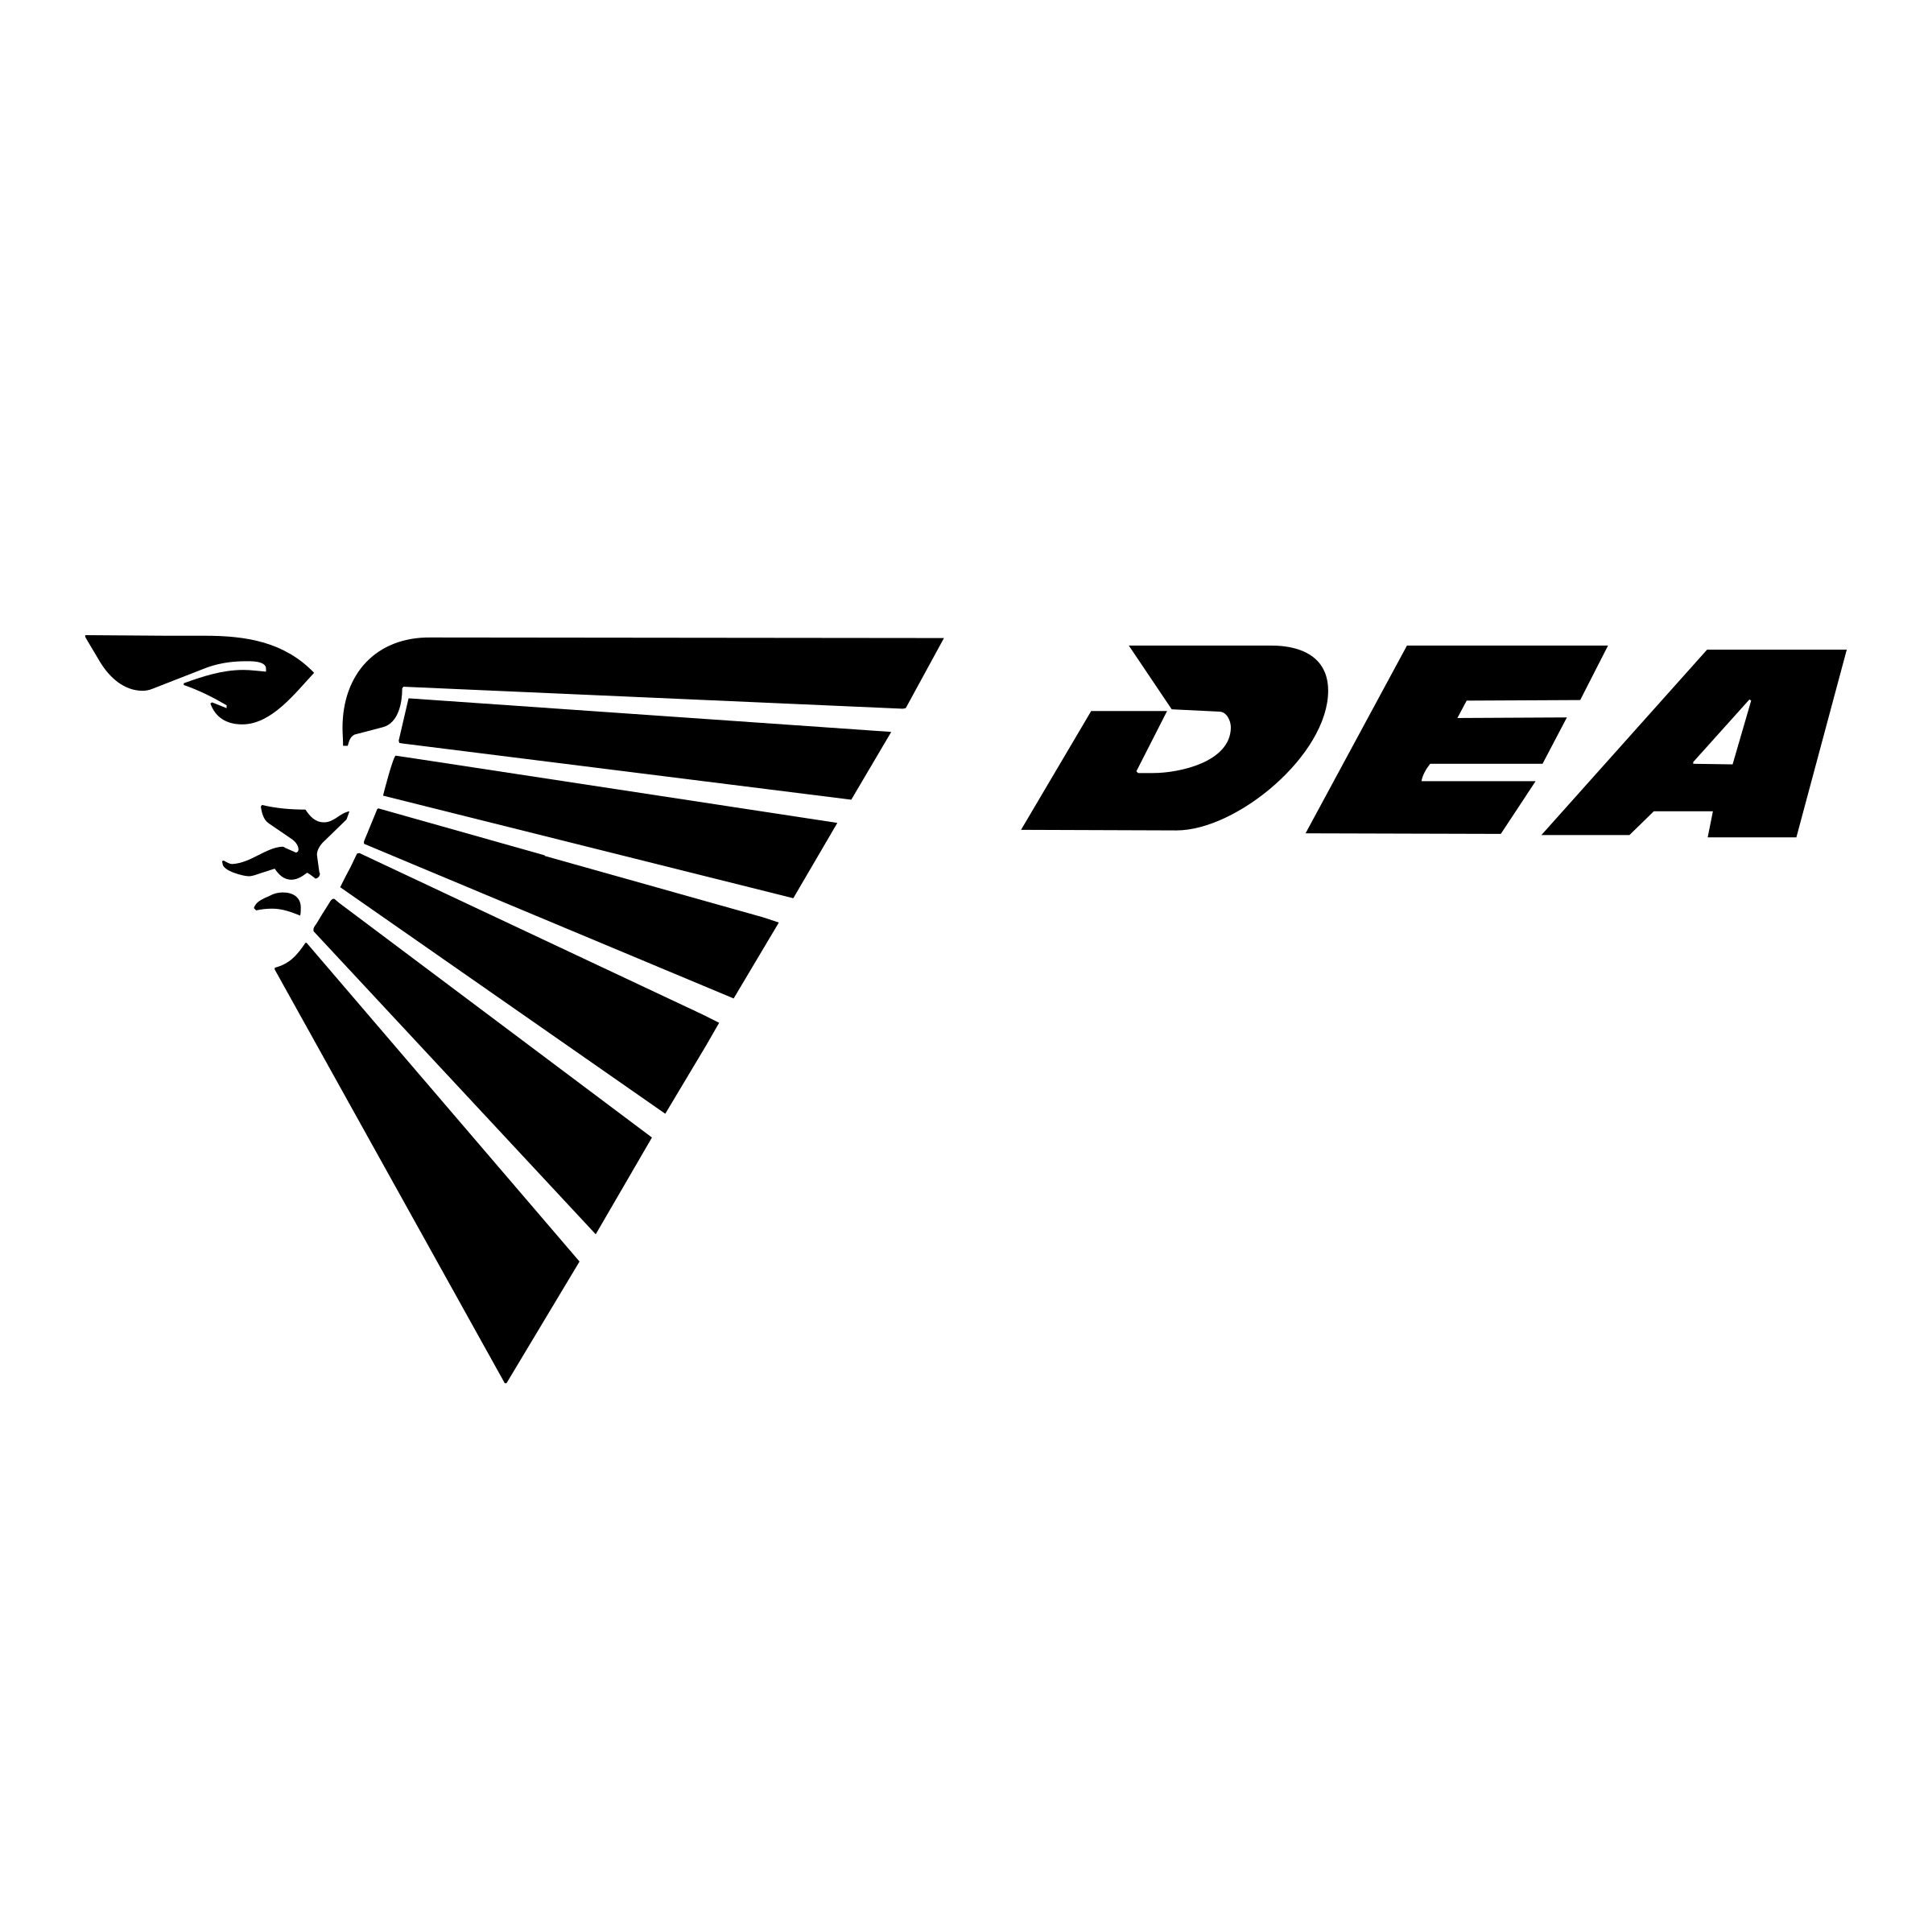 Dea Logo - DEA Logo PNG Transparent & SVG Vector - Freebie Supply